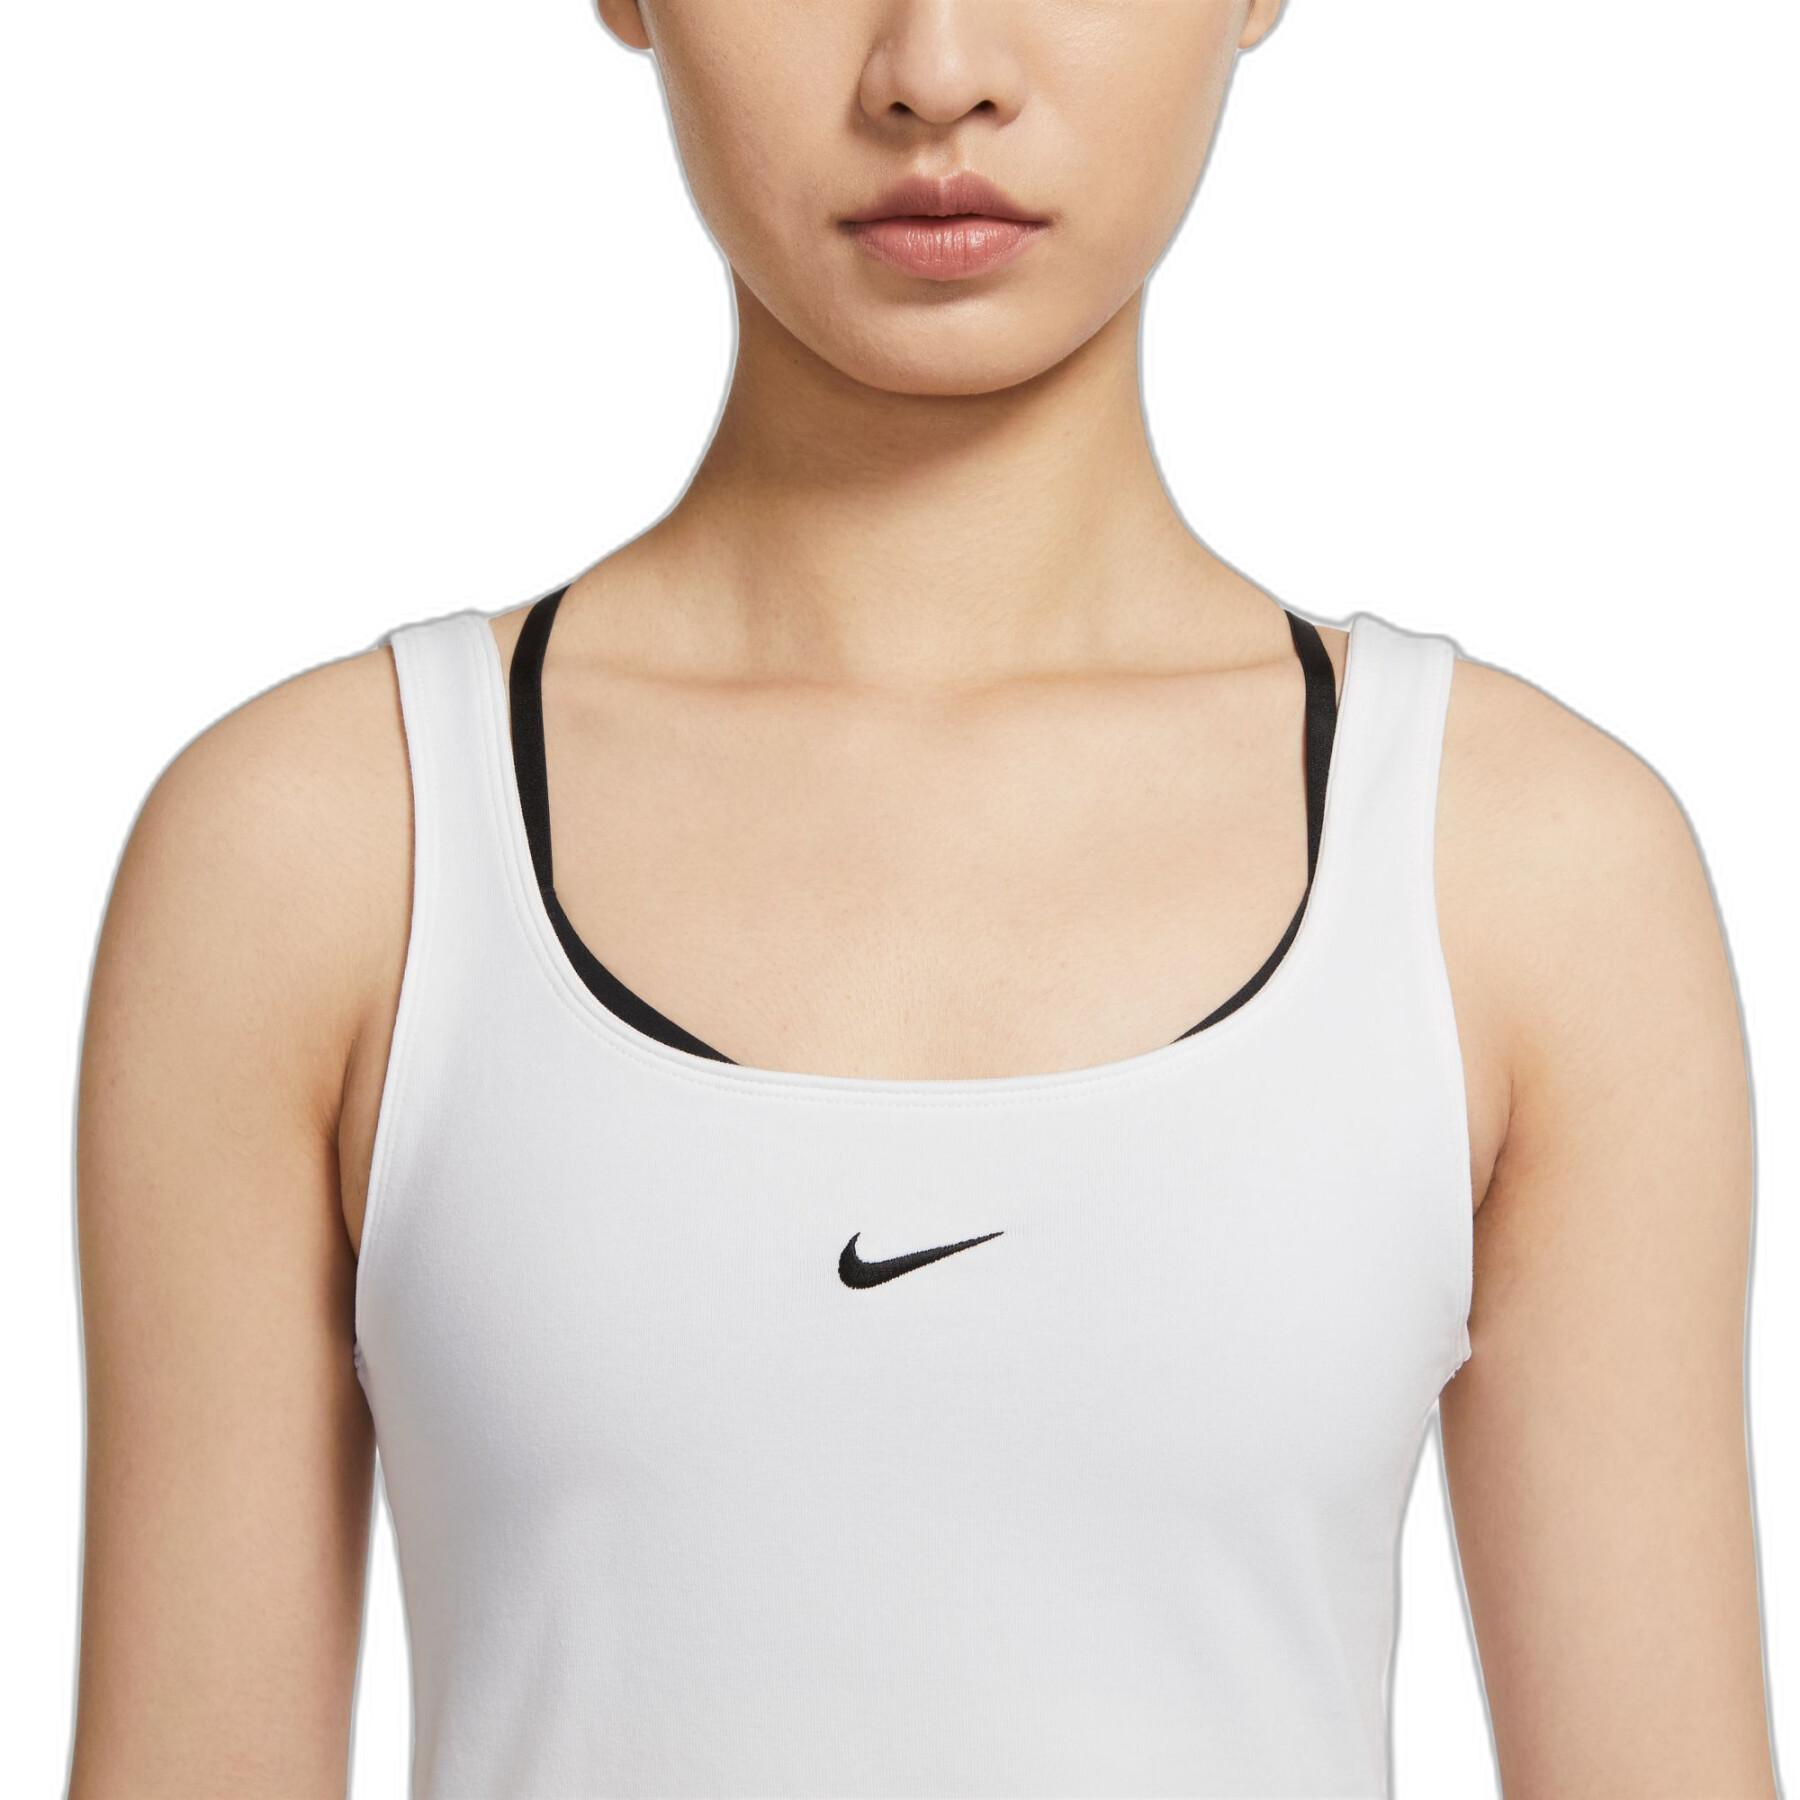 Women's tank top Nike Sportswear Essential Cami